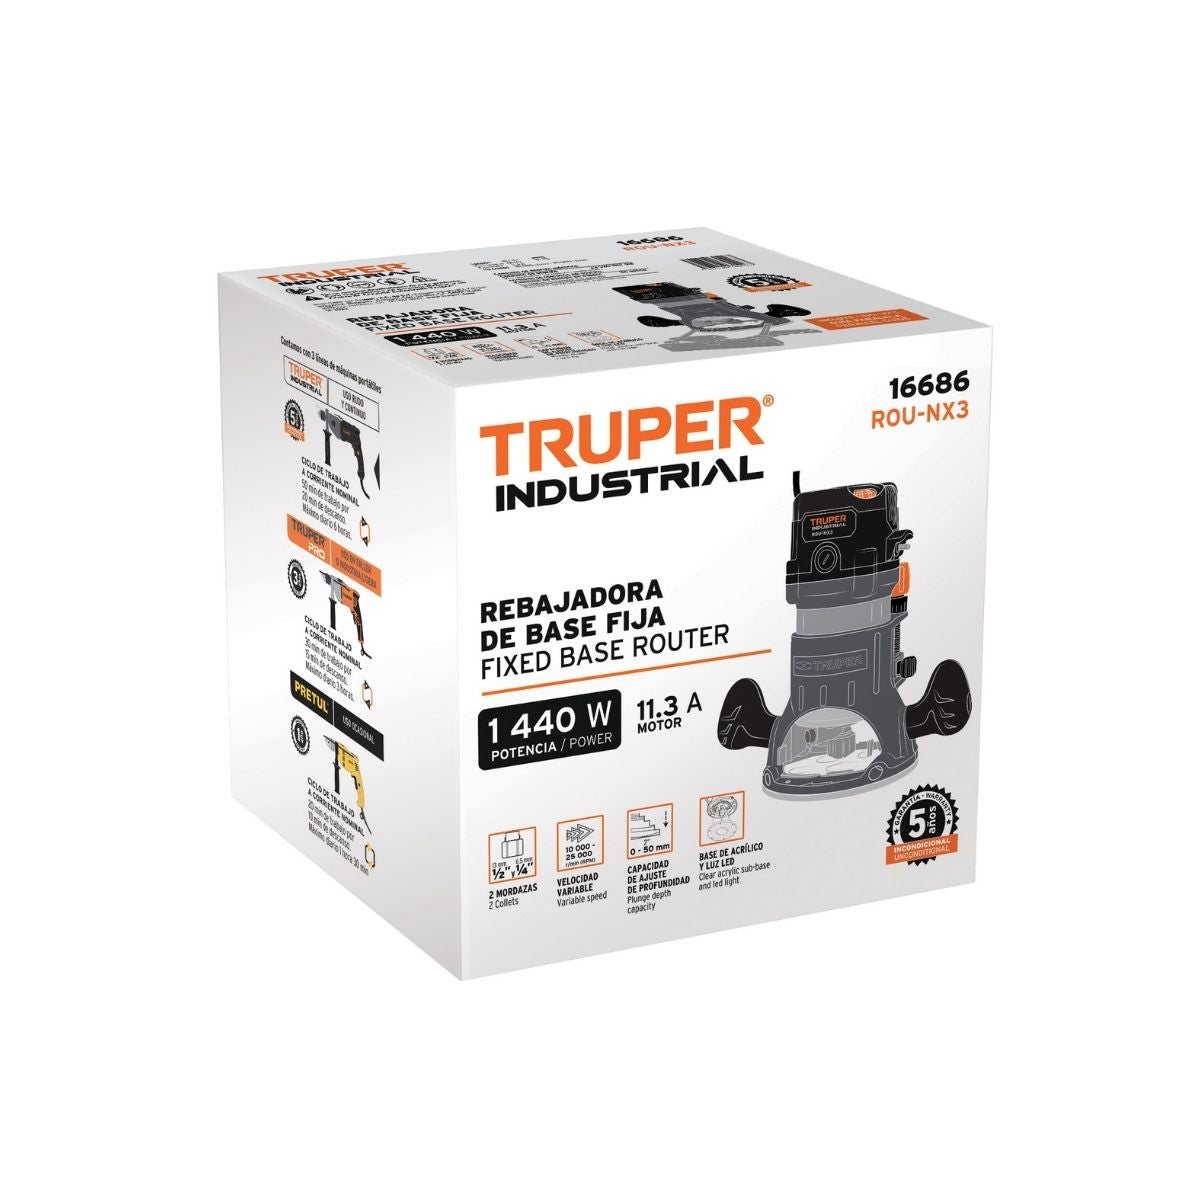 Router Industrial 1440 W 2 HP Truper 16686